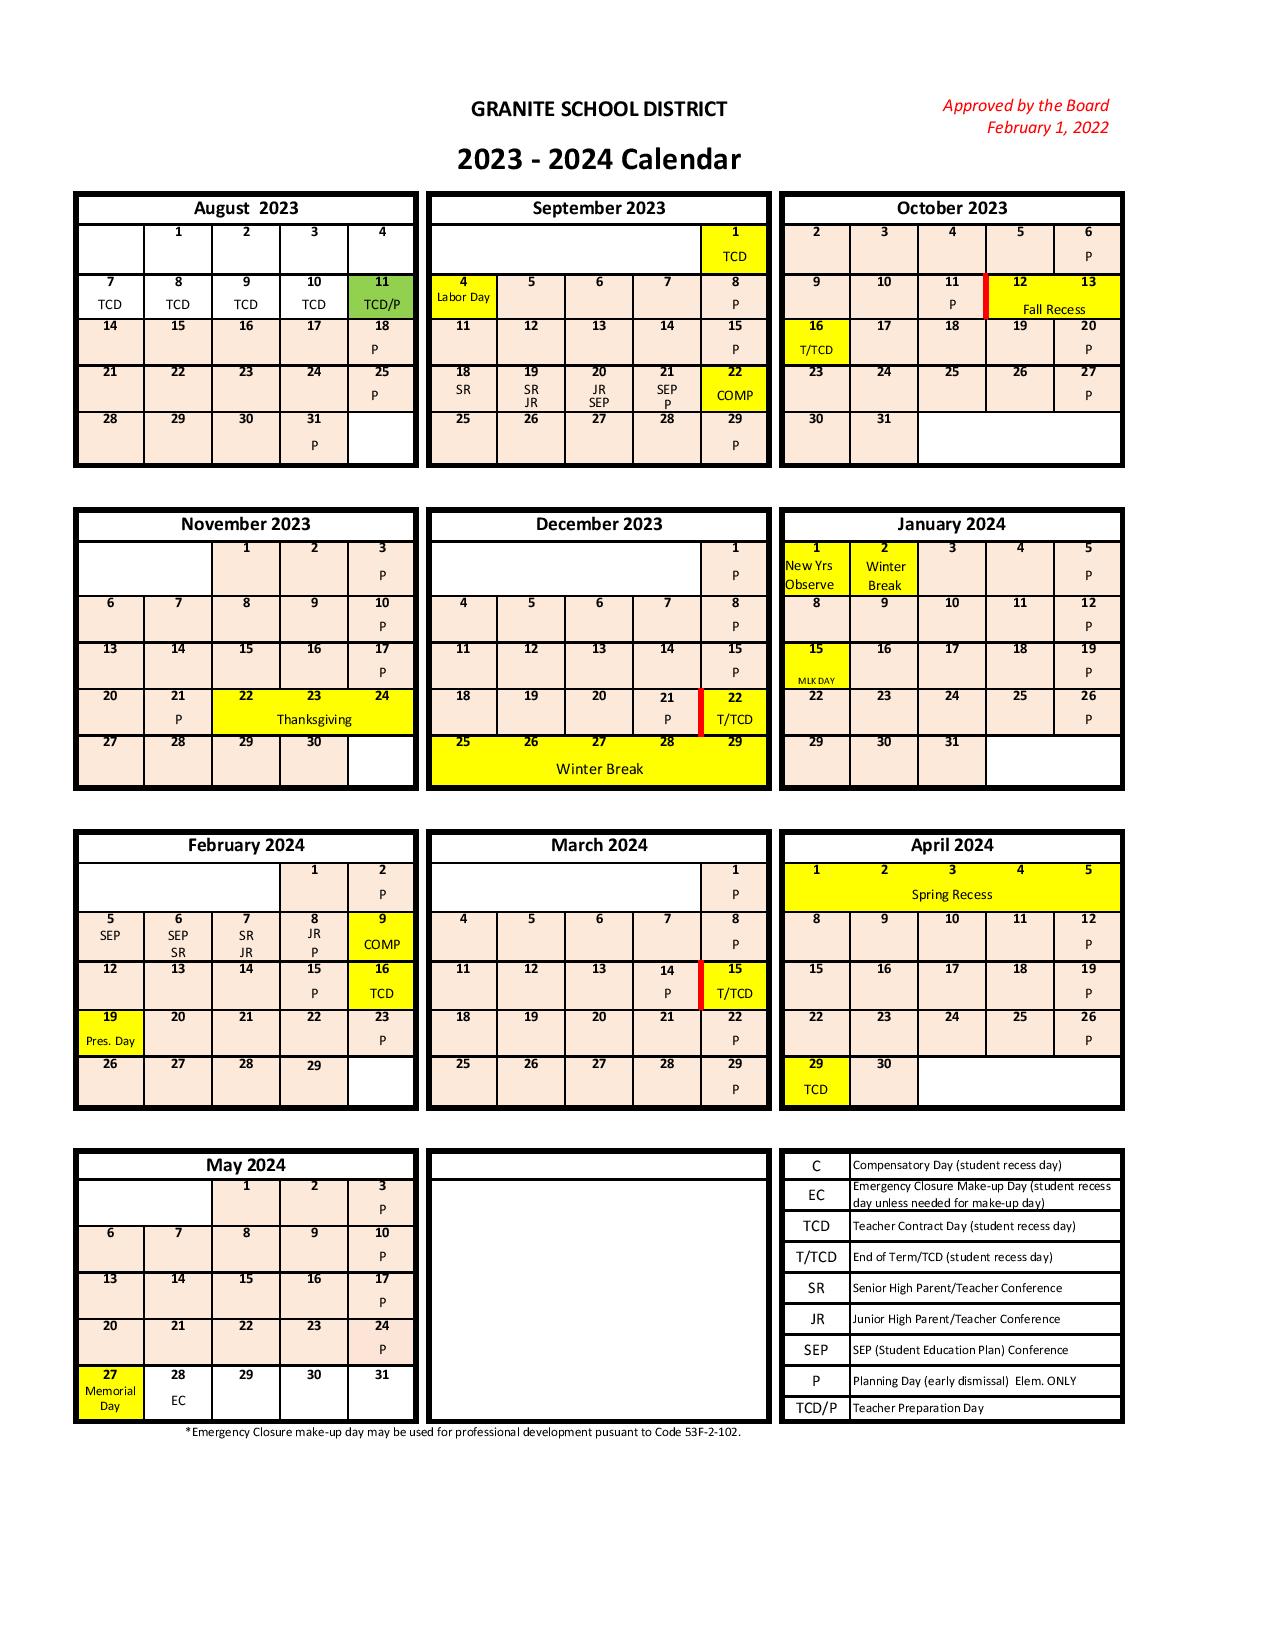 Granite School District Calendar Holidays 2023 2024